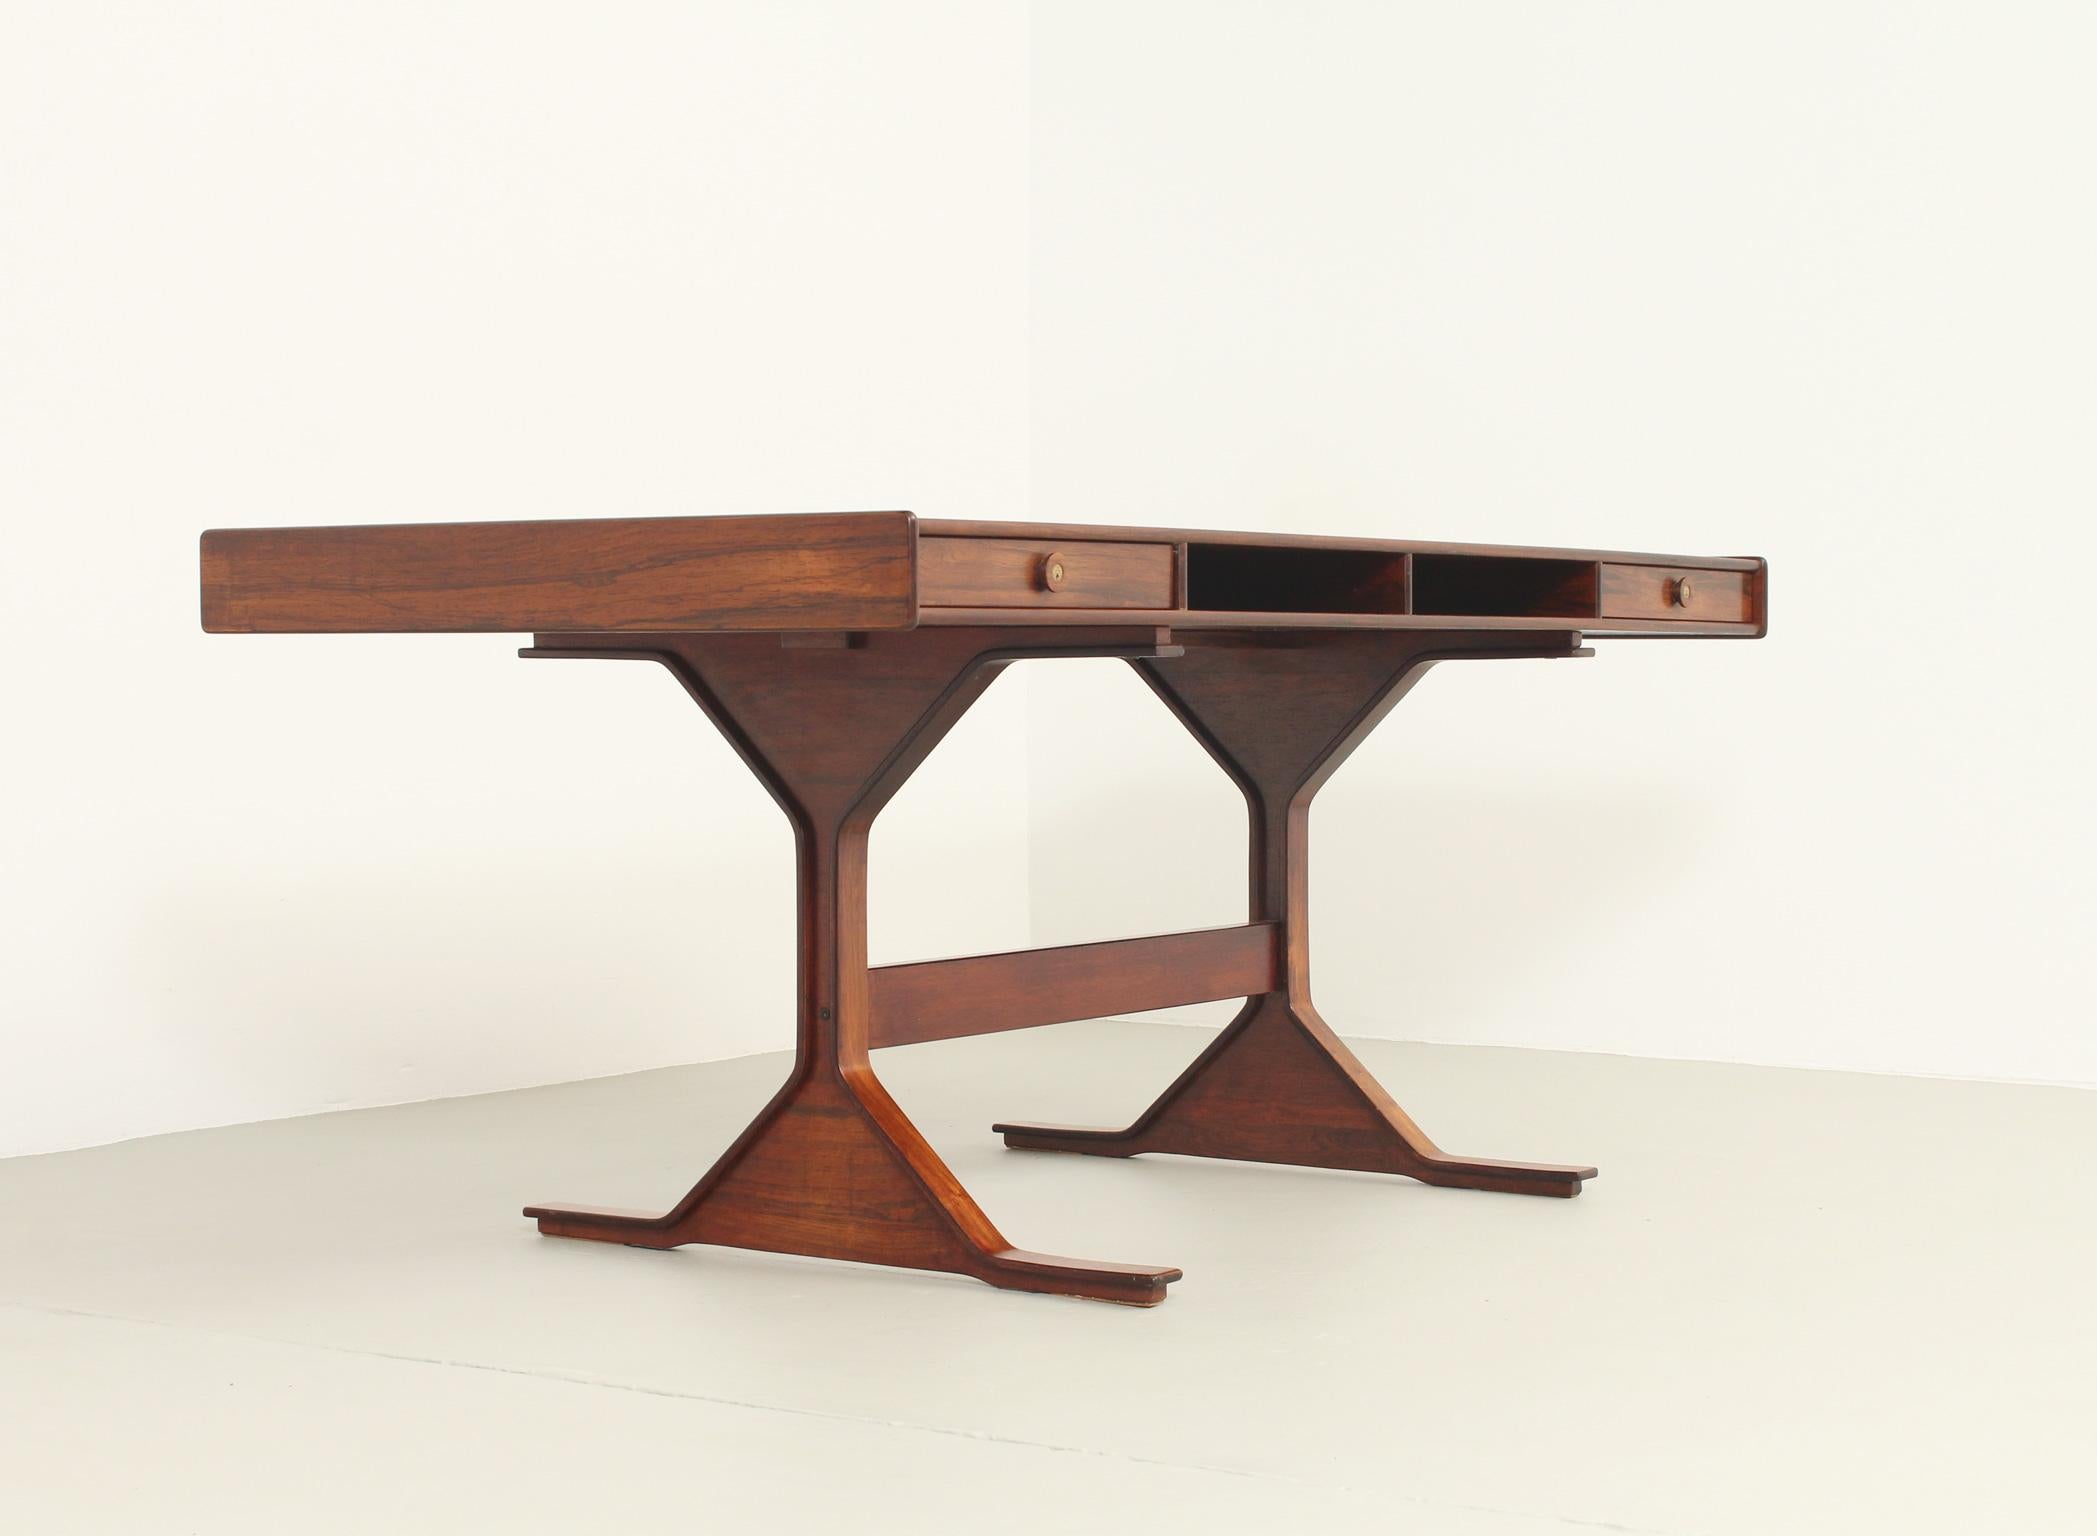 Wood Gianfranco Frattini Desk for Bernini, Italy, 1956